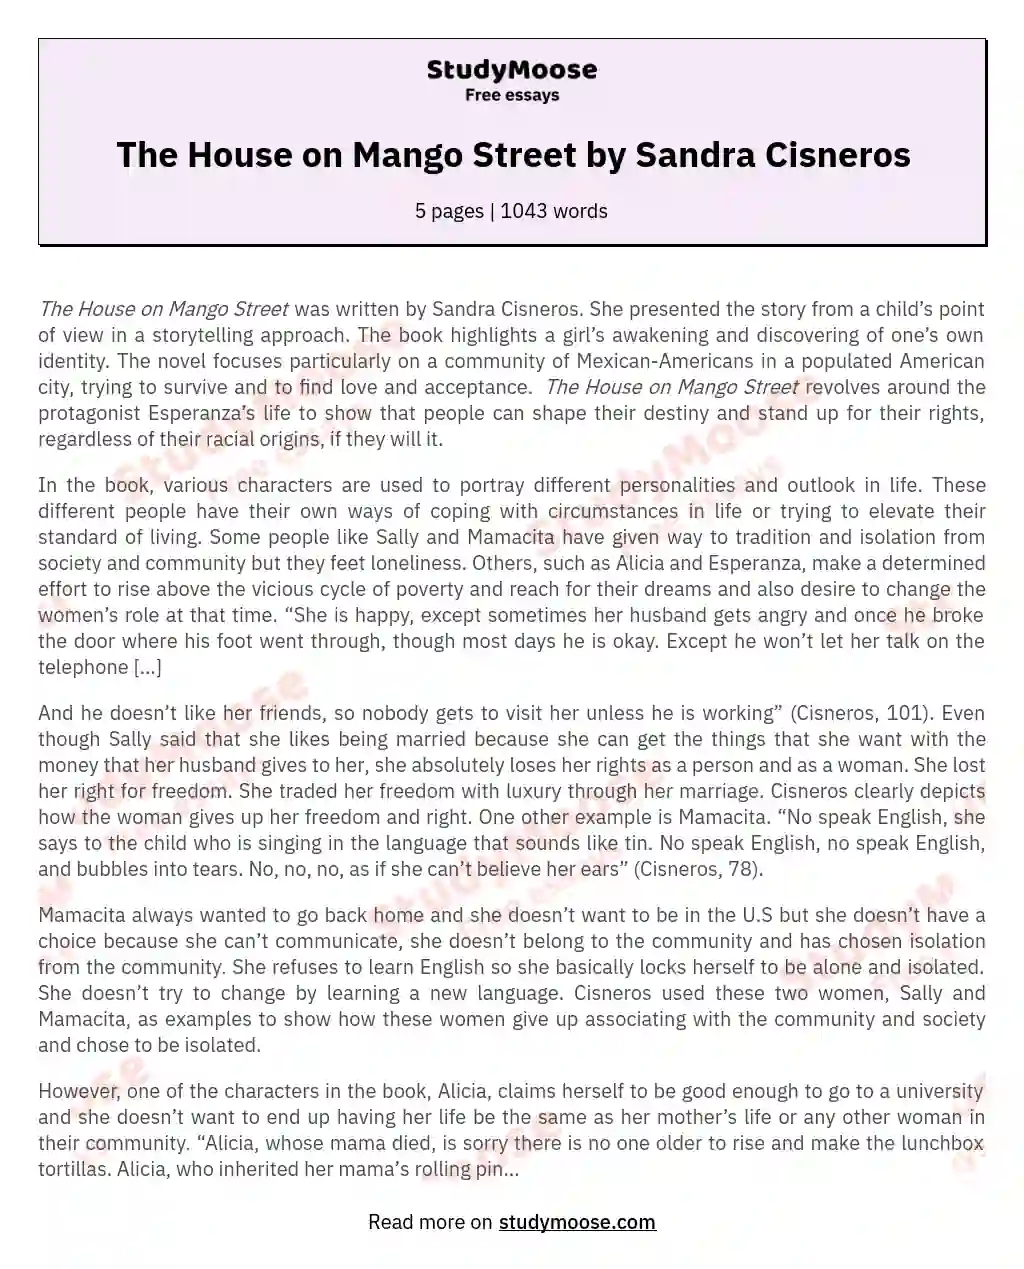 The House on Mango Street by Sandra Cisneros essay